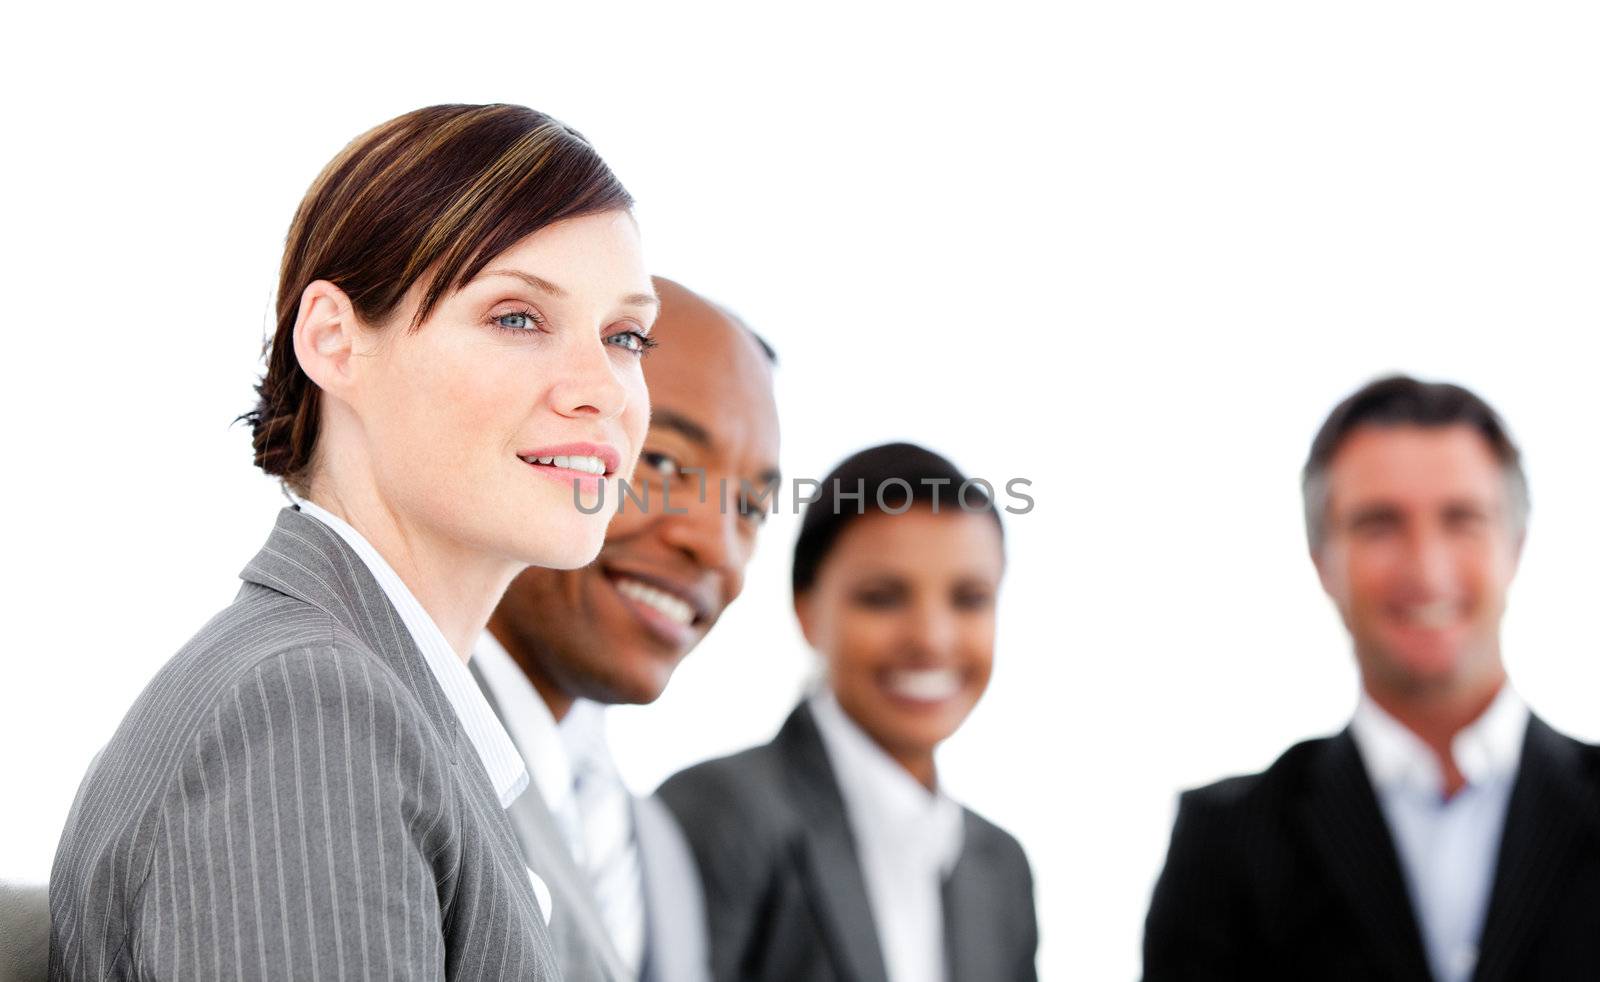 Portrait of smiling businesspeople listenning a presentation  by Wavebreakmedia